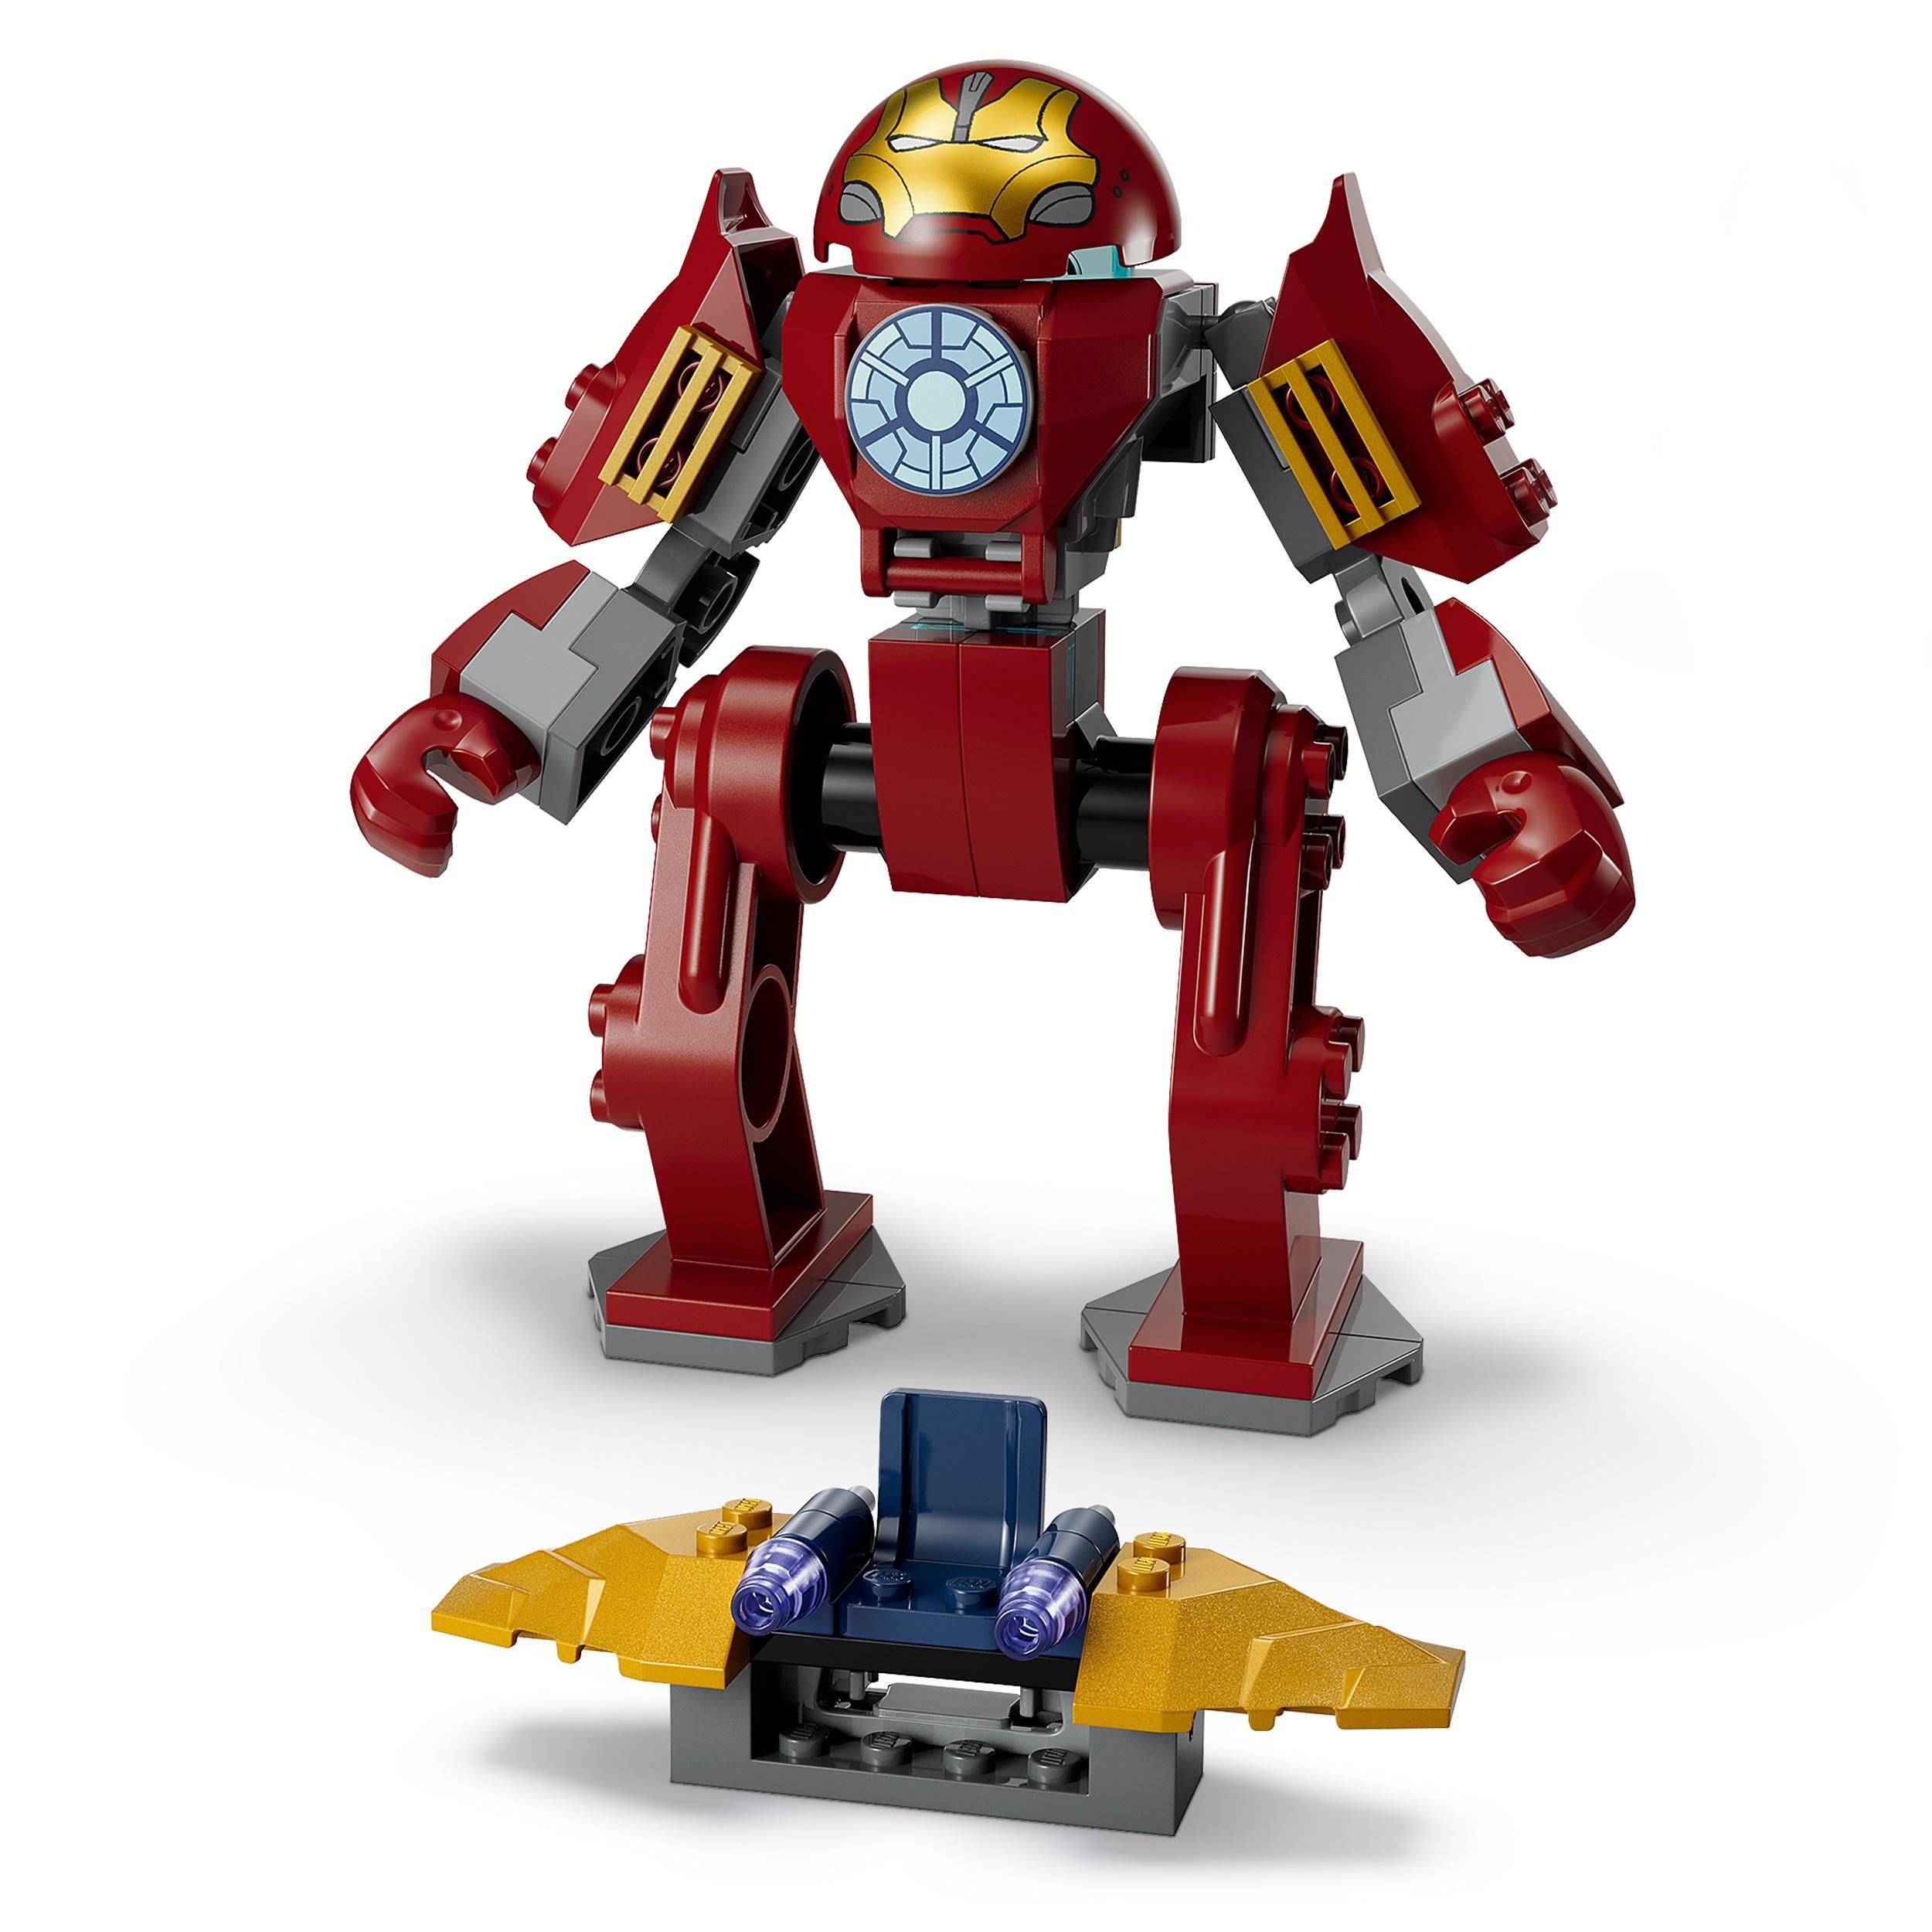 LEGO Iron Man Hulkbuster vs. Thanos